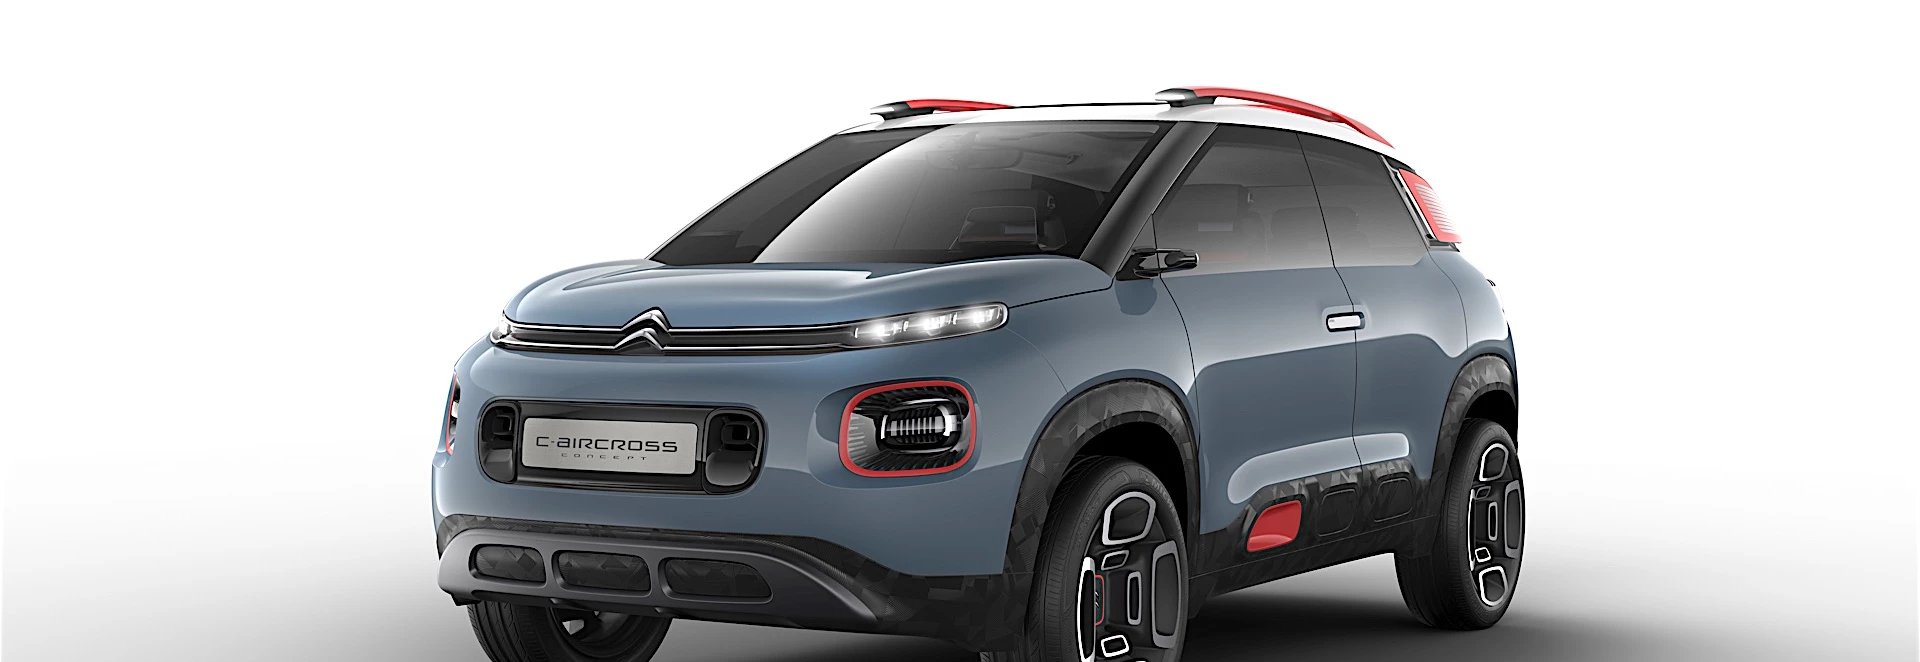 Citroen’s new mini-SUV concept brings back the Aircross name